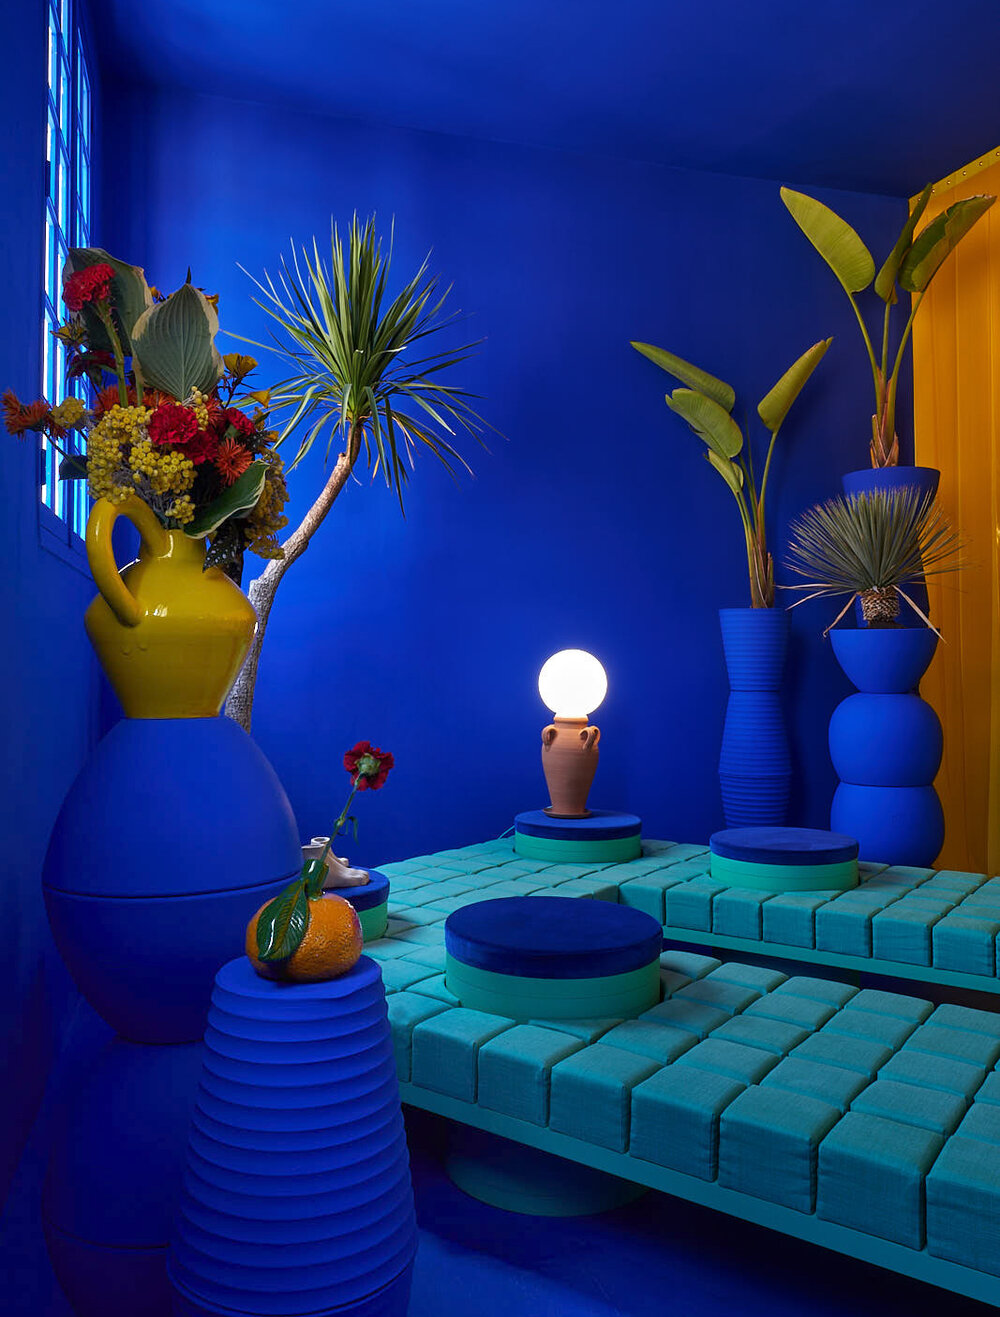 ilaria fatone inspirations - une installation artistique en bleu klein